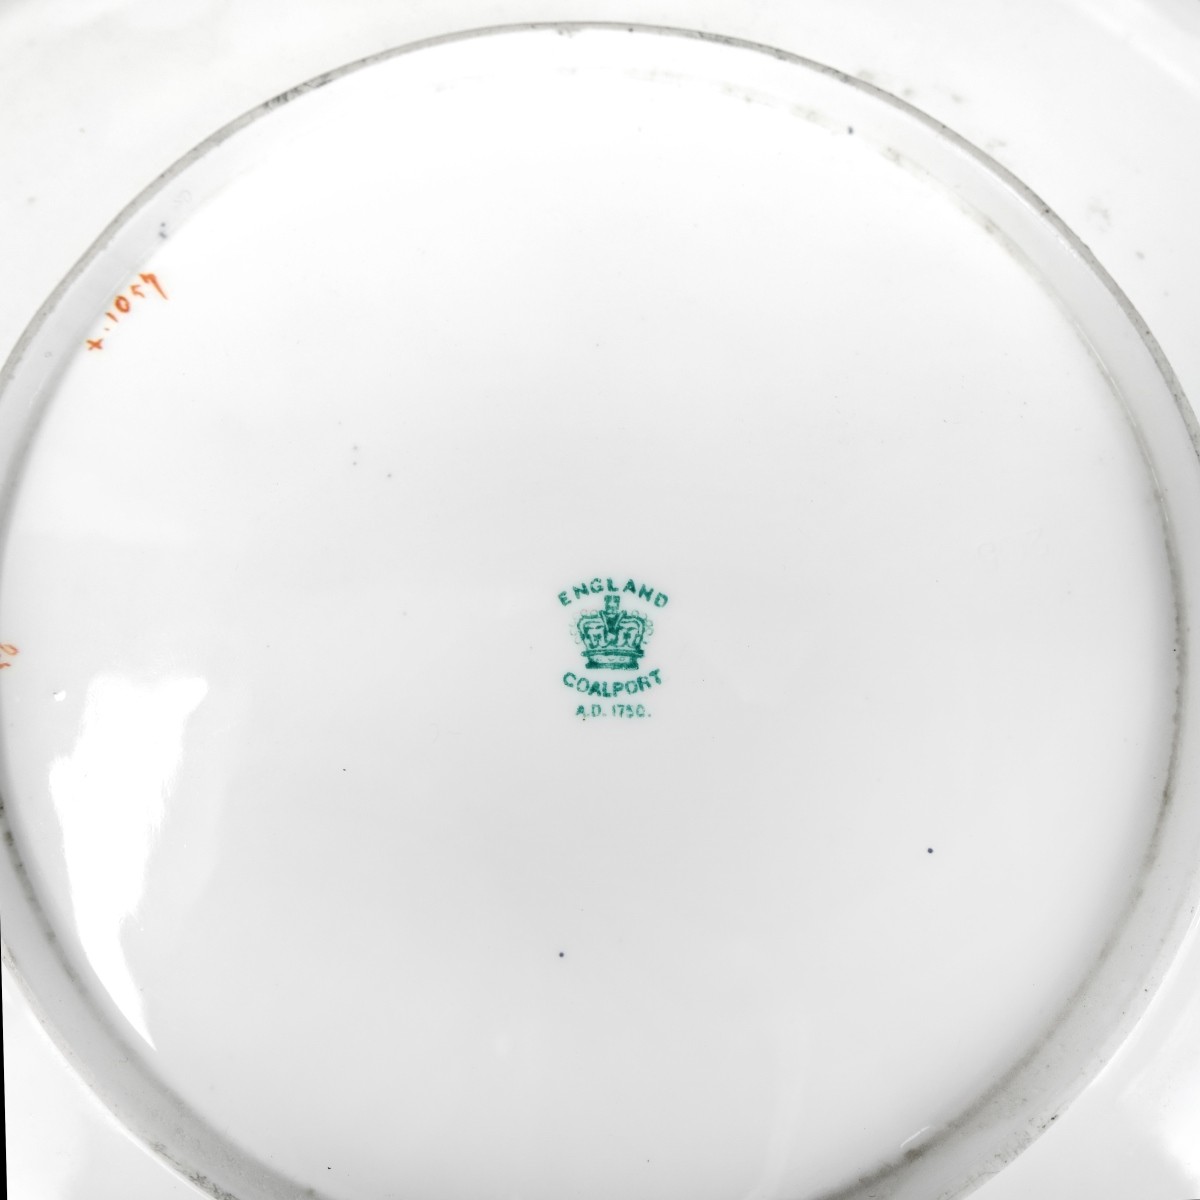 (5) Vintage Porcelain Plates